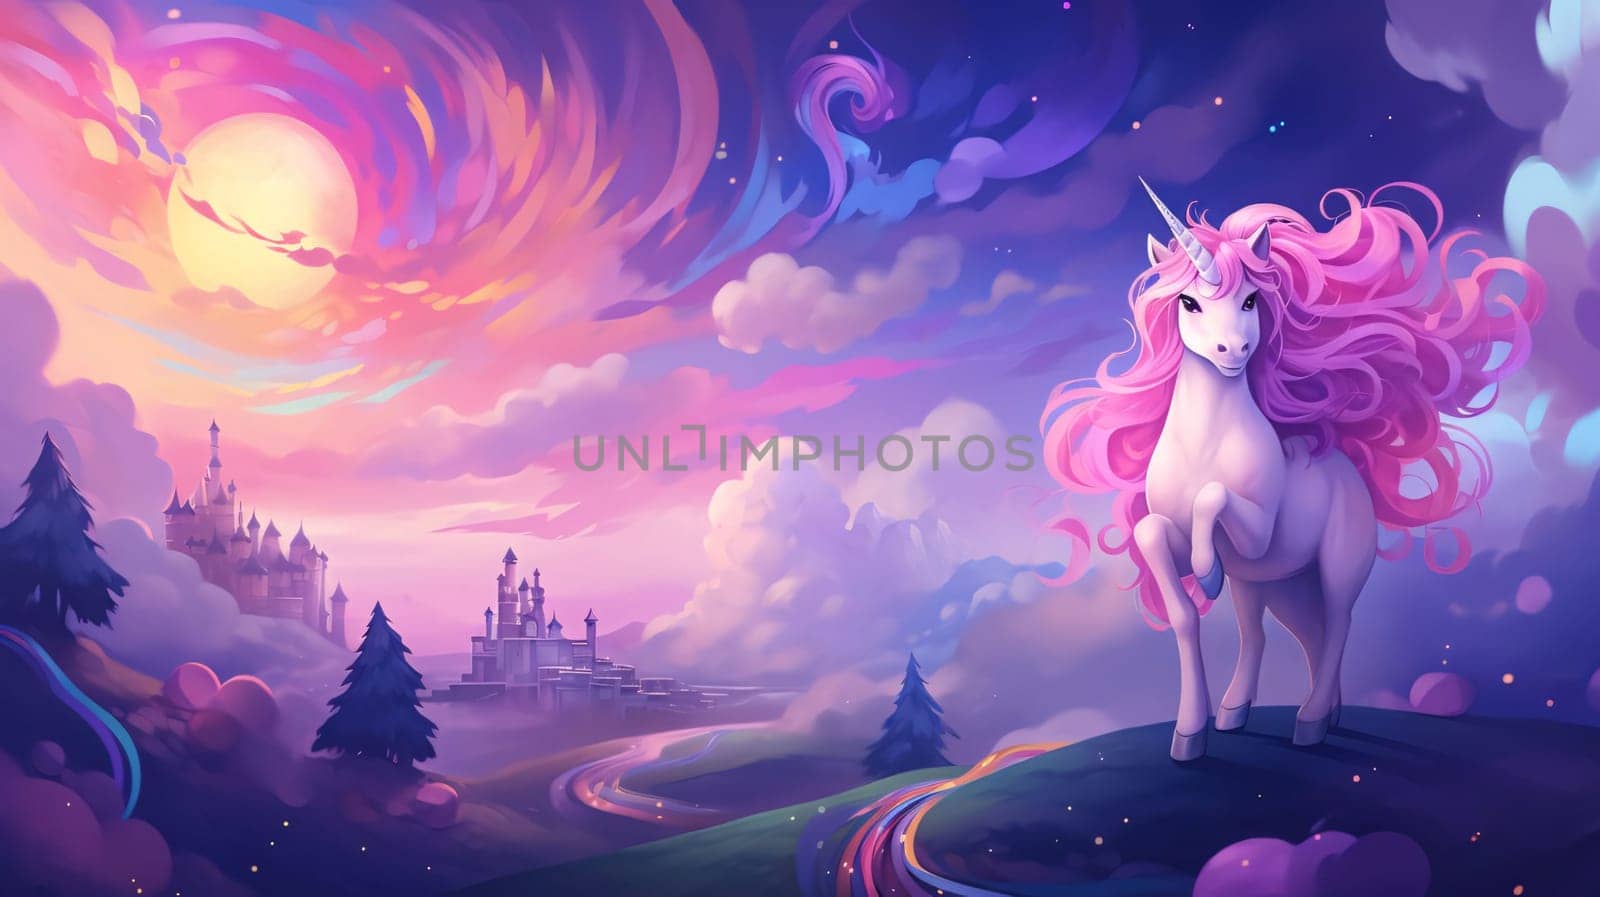 Banner: Unicorn in the fantasy landscape. Fairytale background. Vector illustration.